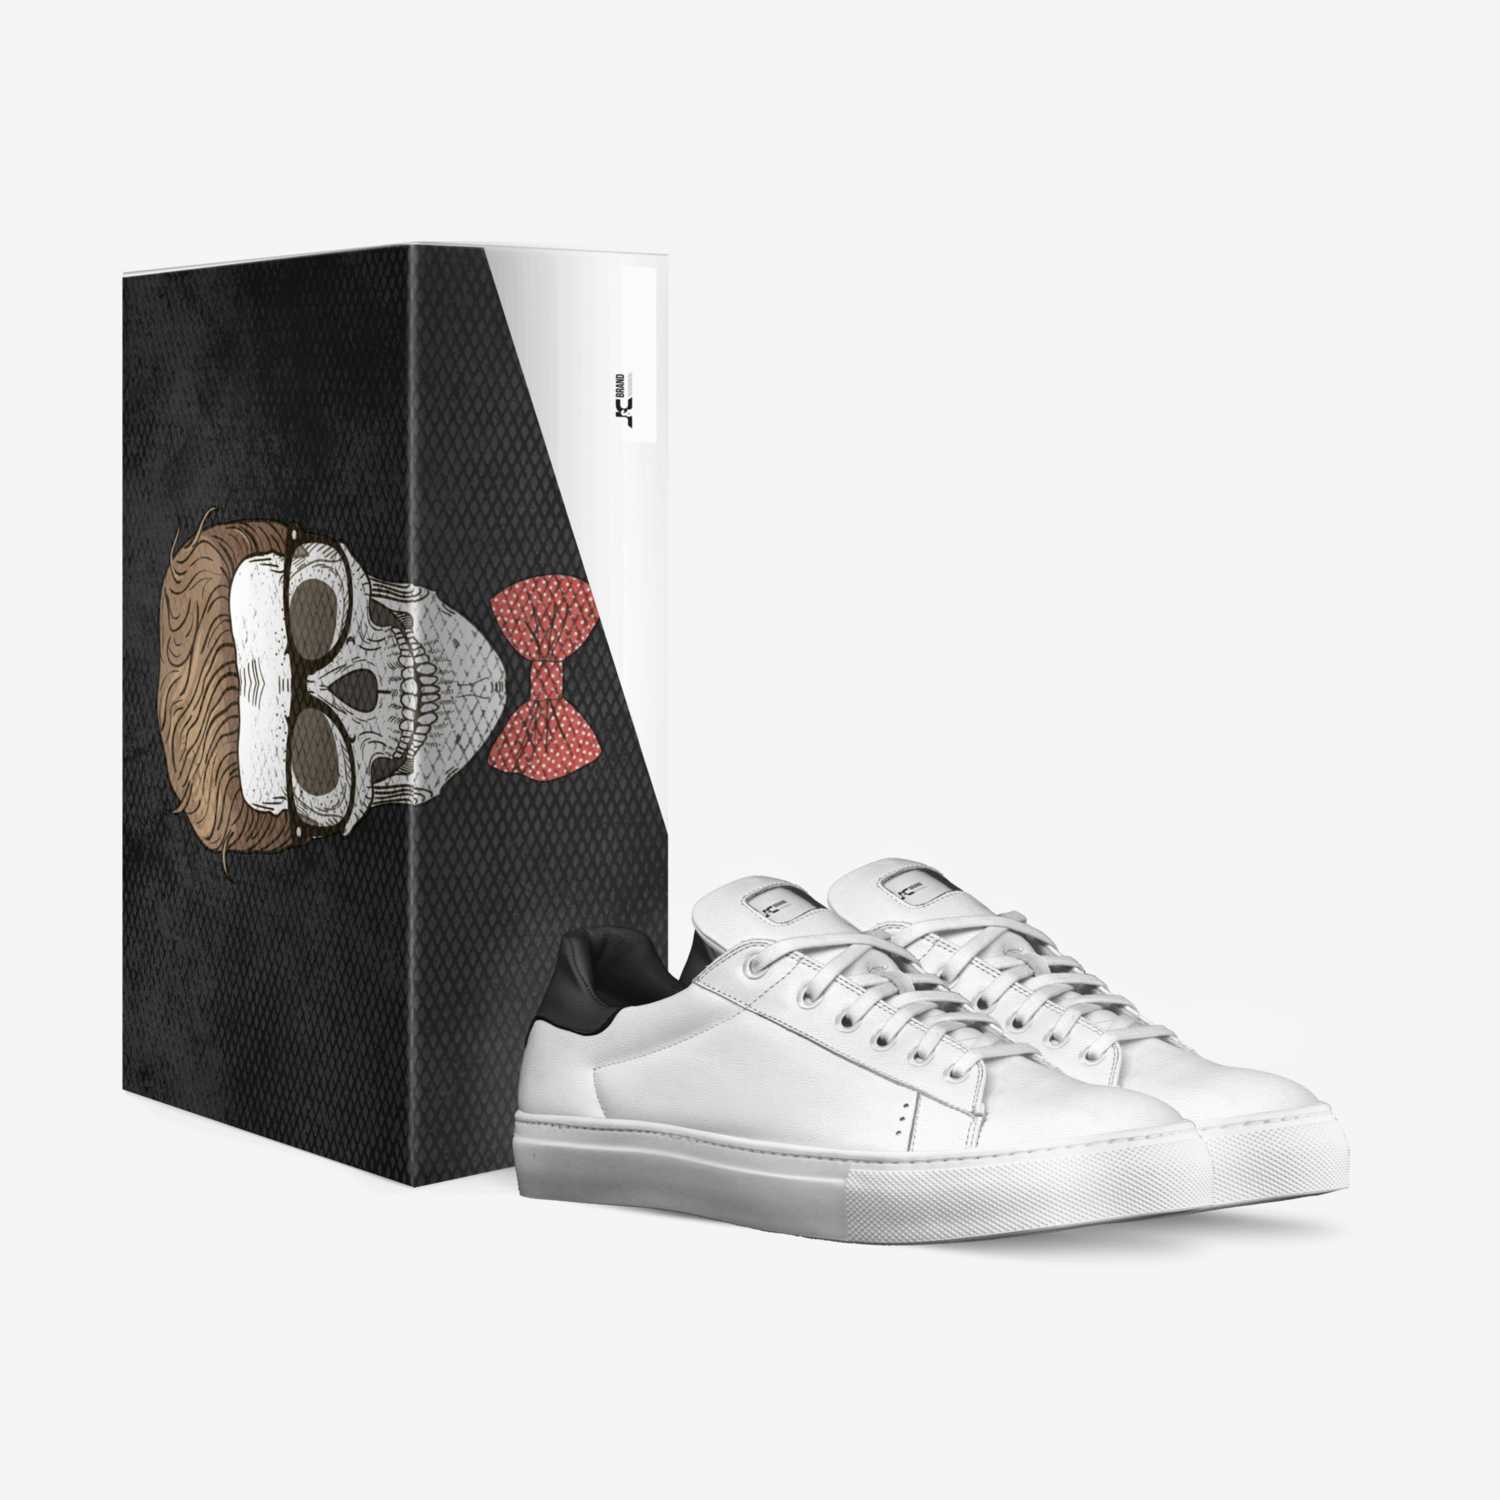 J&C Brand custom made in Italy shoes by Christian Sambranoooo | Box view